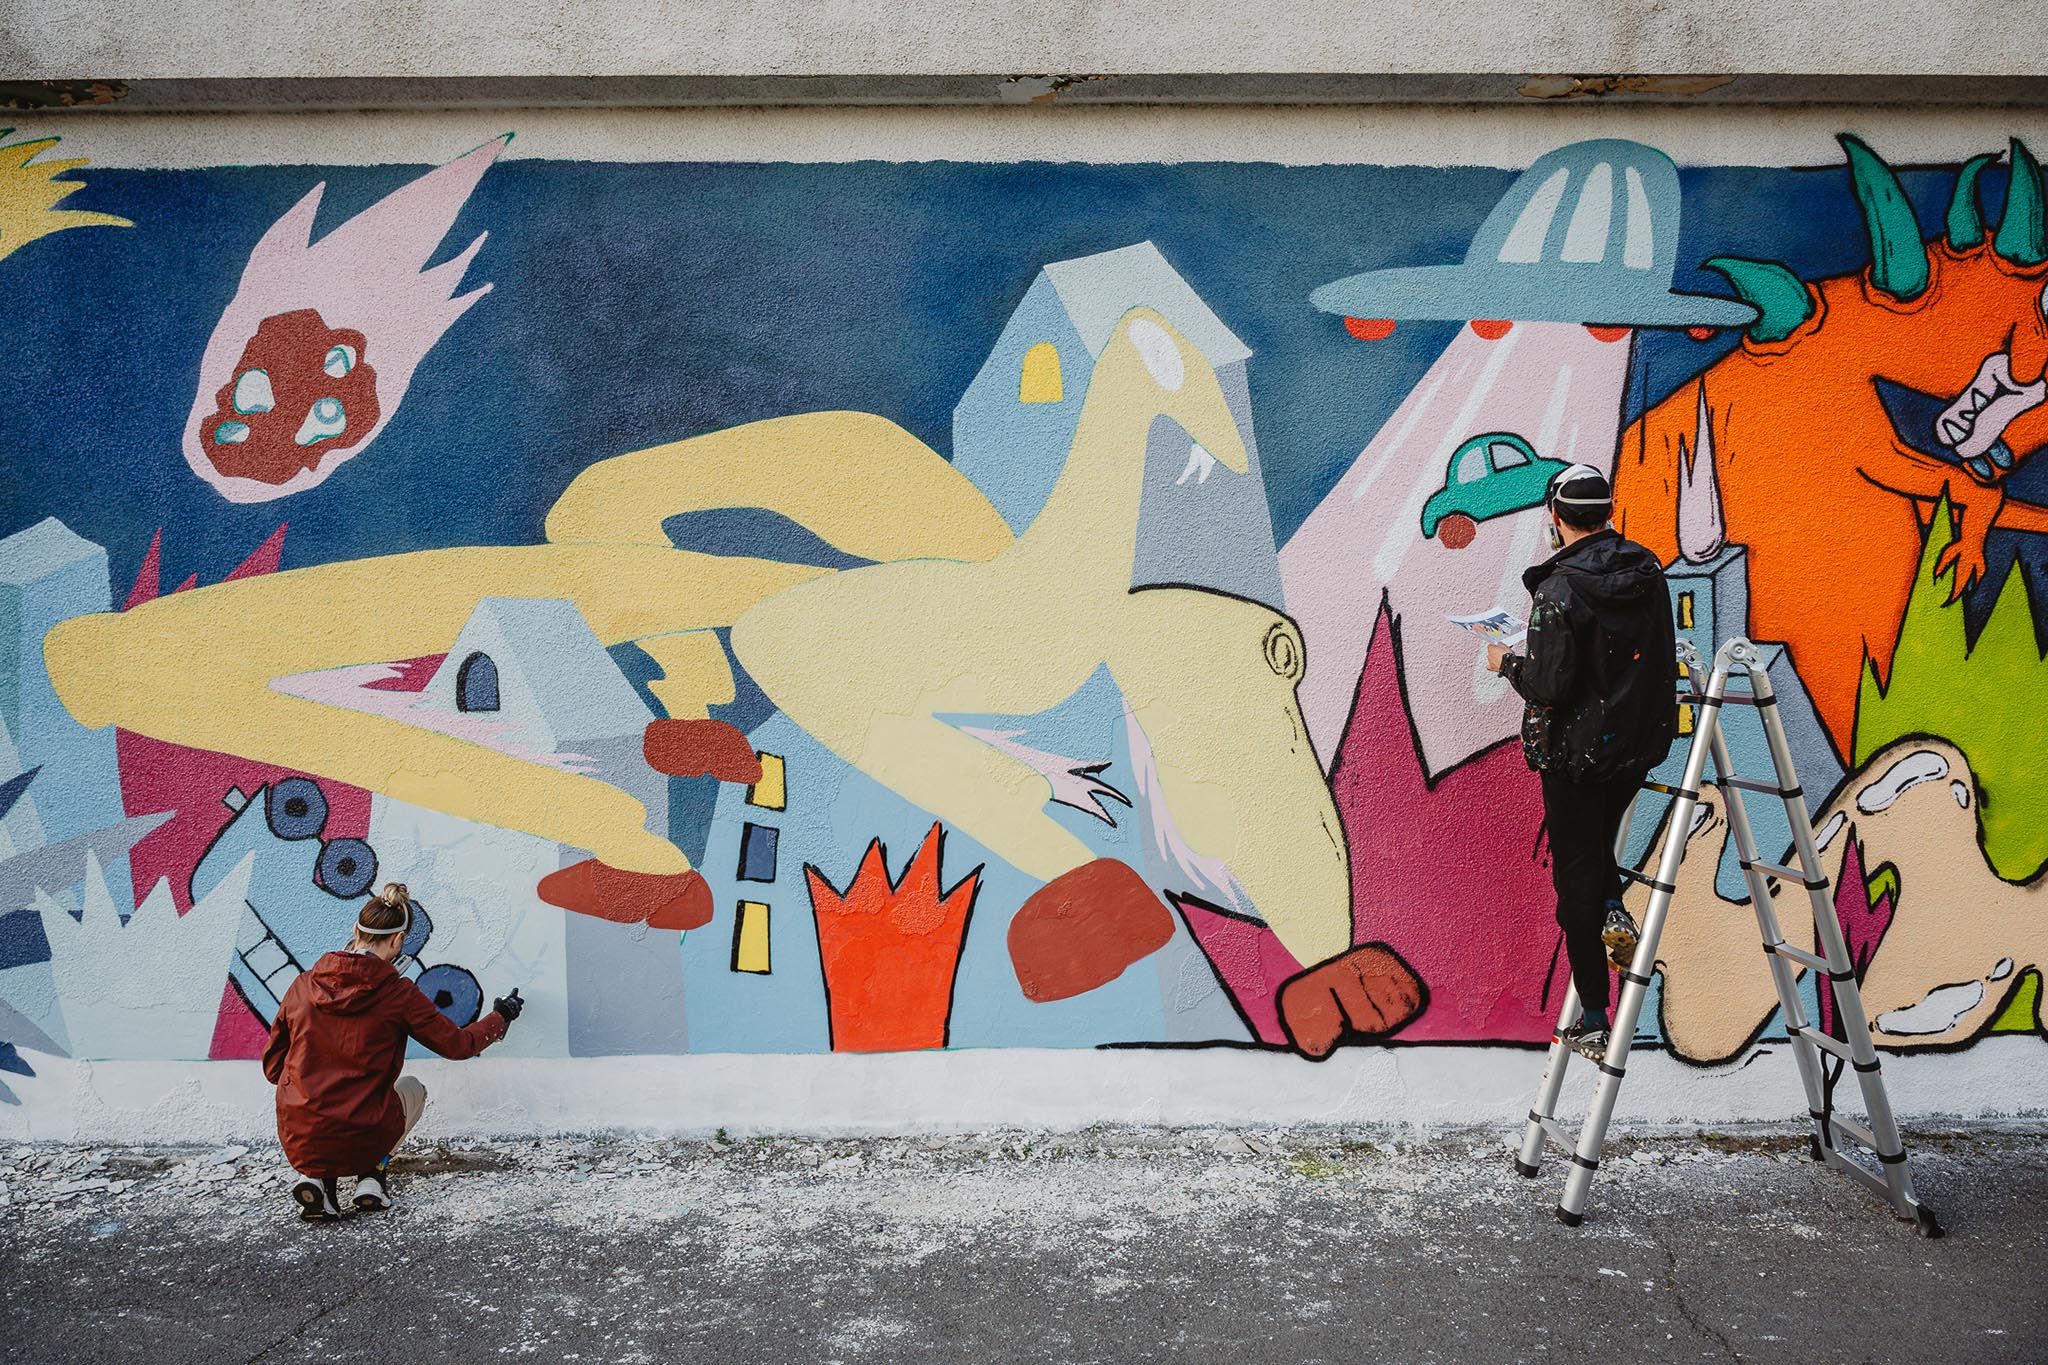 Delia Cîrstea + Roper (mural) & Kozo (soundtrack) in Bucharest at Romexpo, during the Romanian Street Art